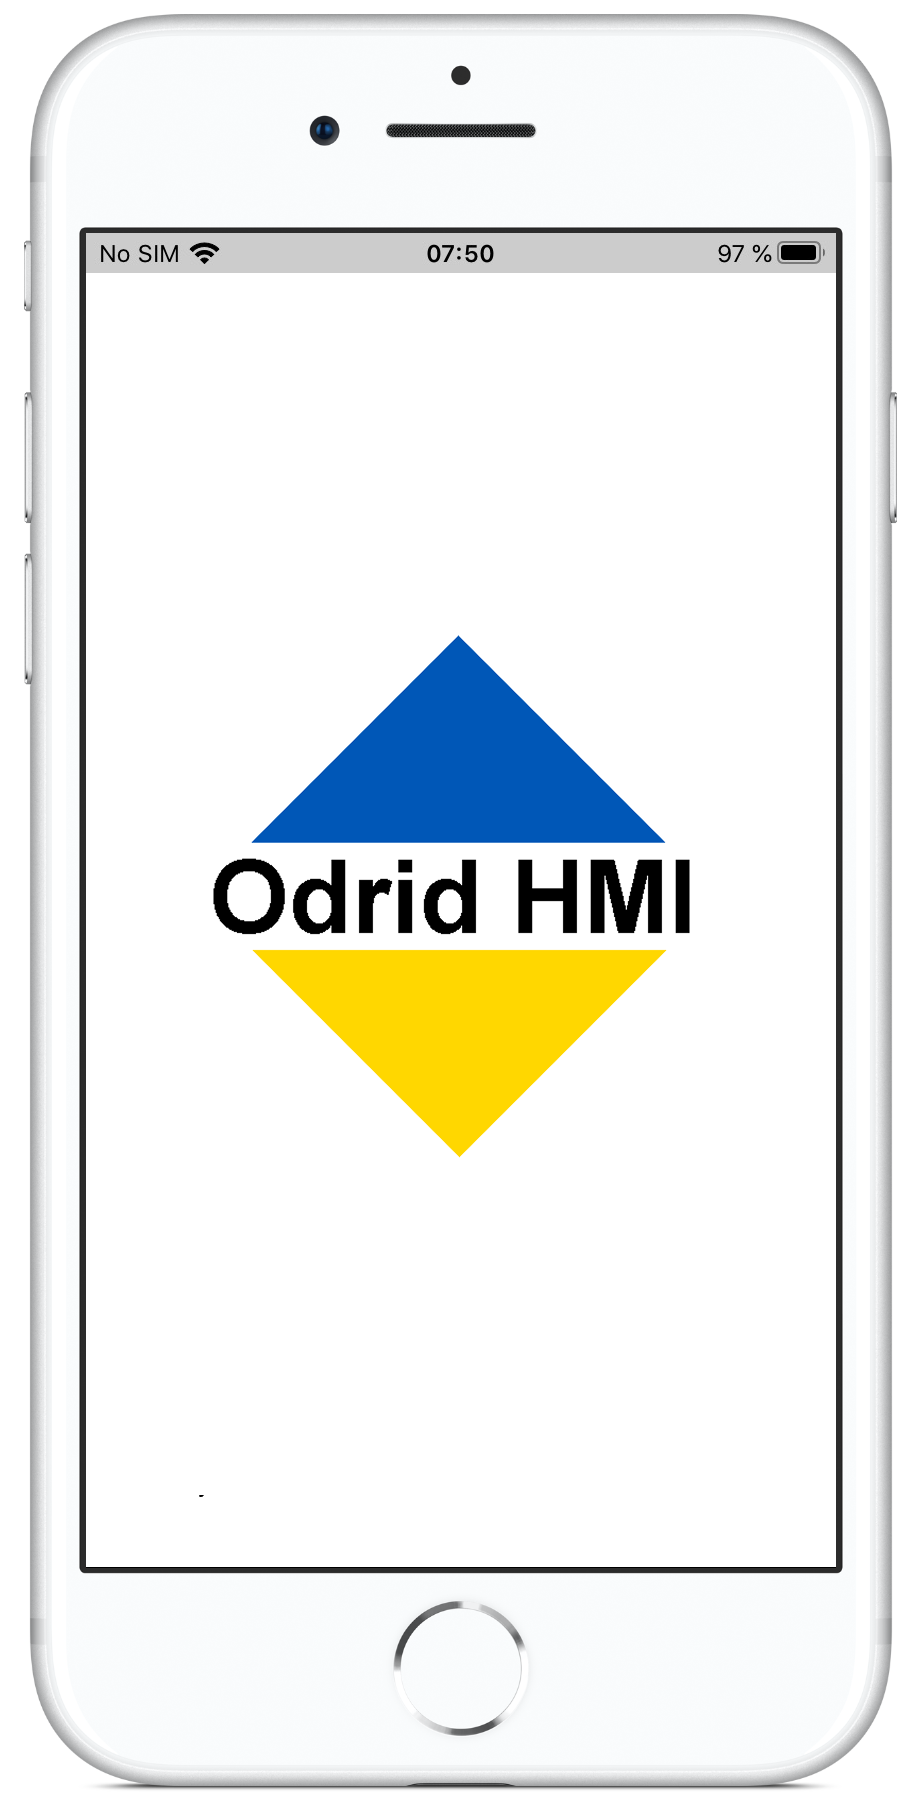 Odrid HMI - Launch screen